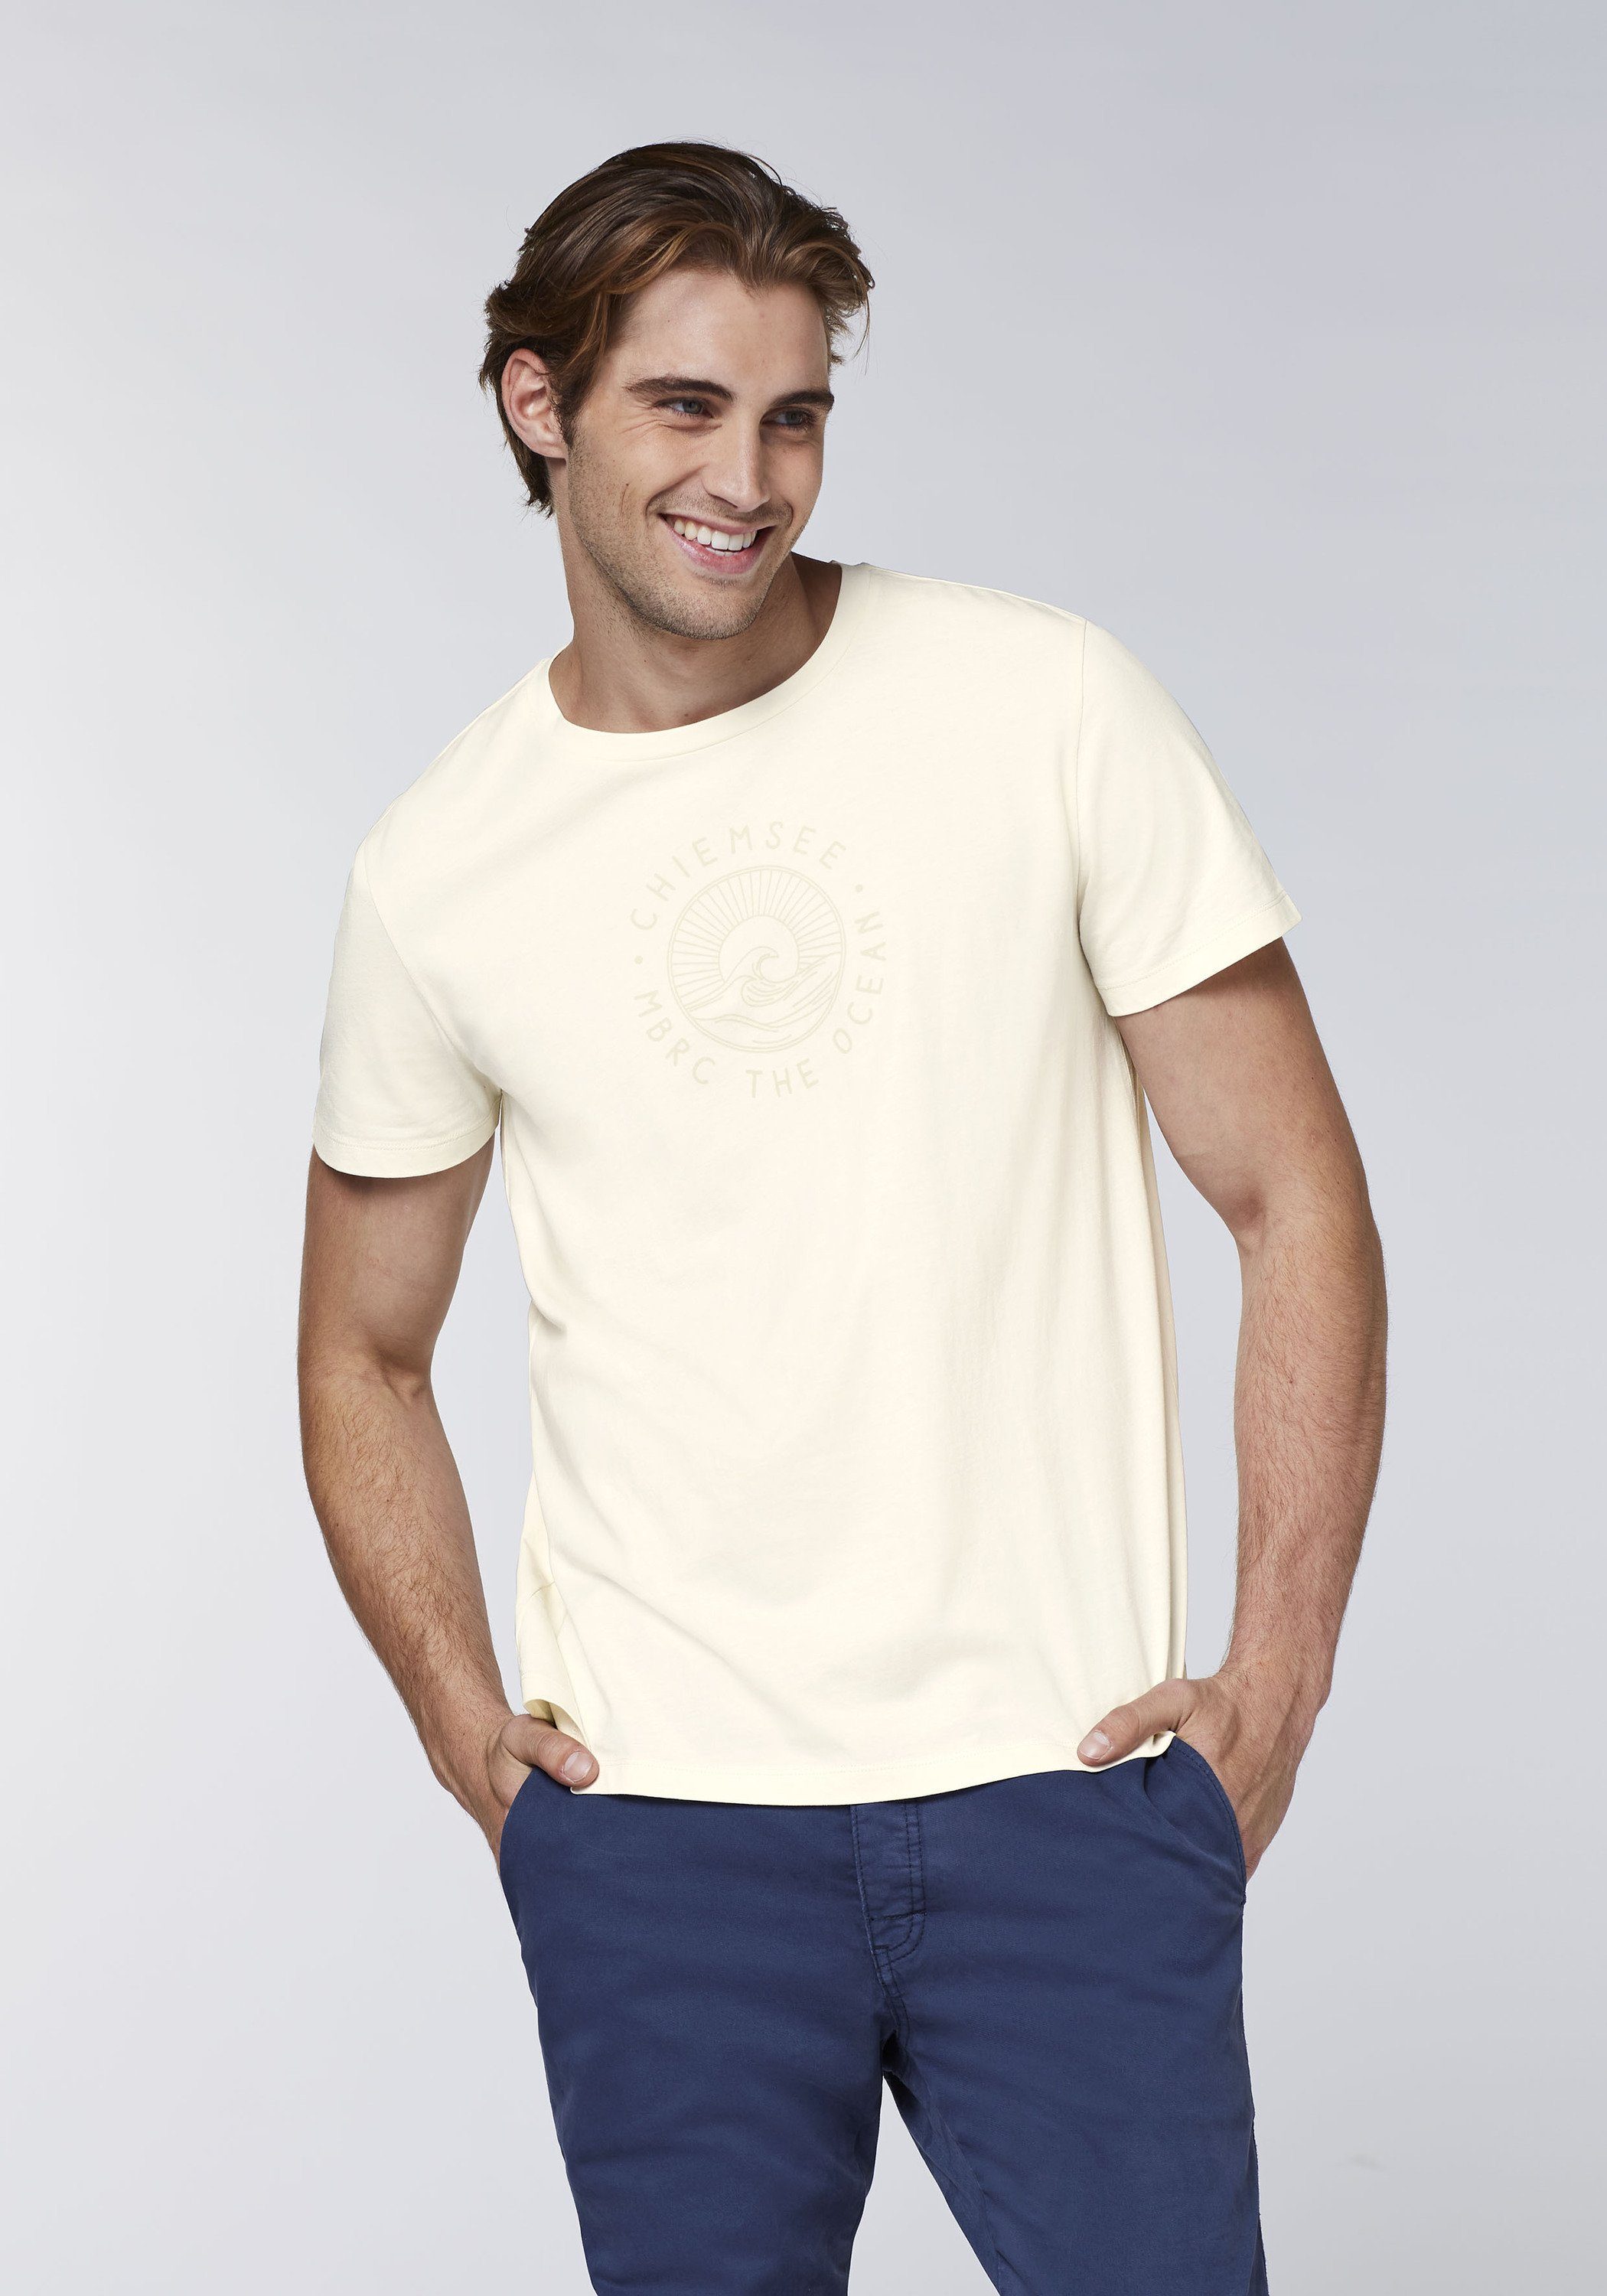 T-Shirt Natural Wellenmotiv Chiemsee 12 1 mit Print-Shirt